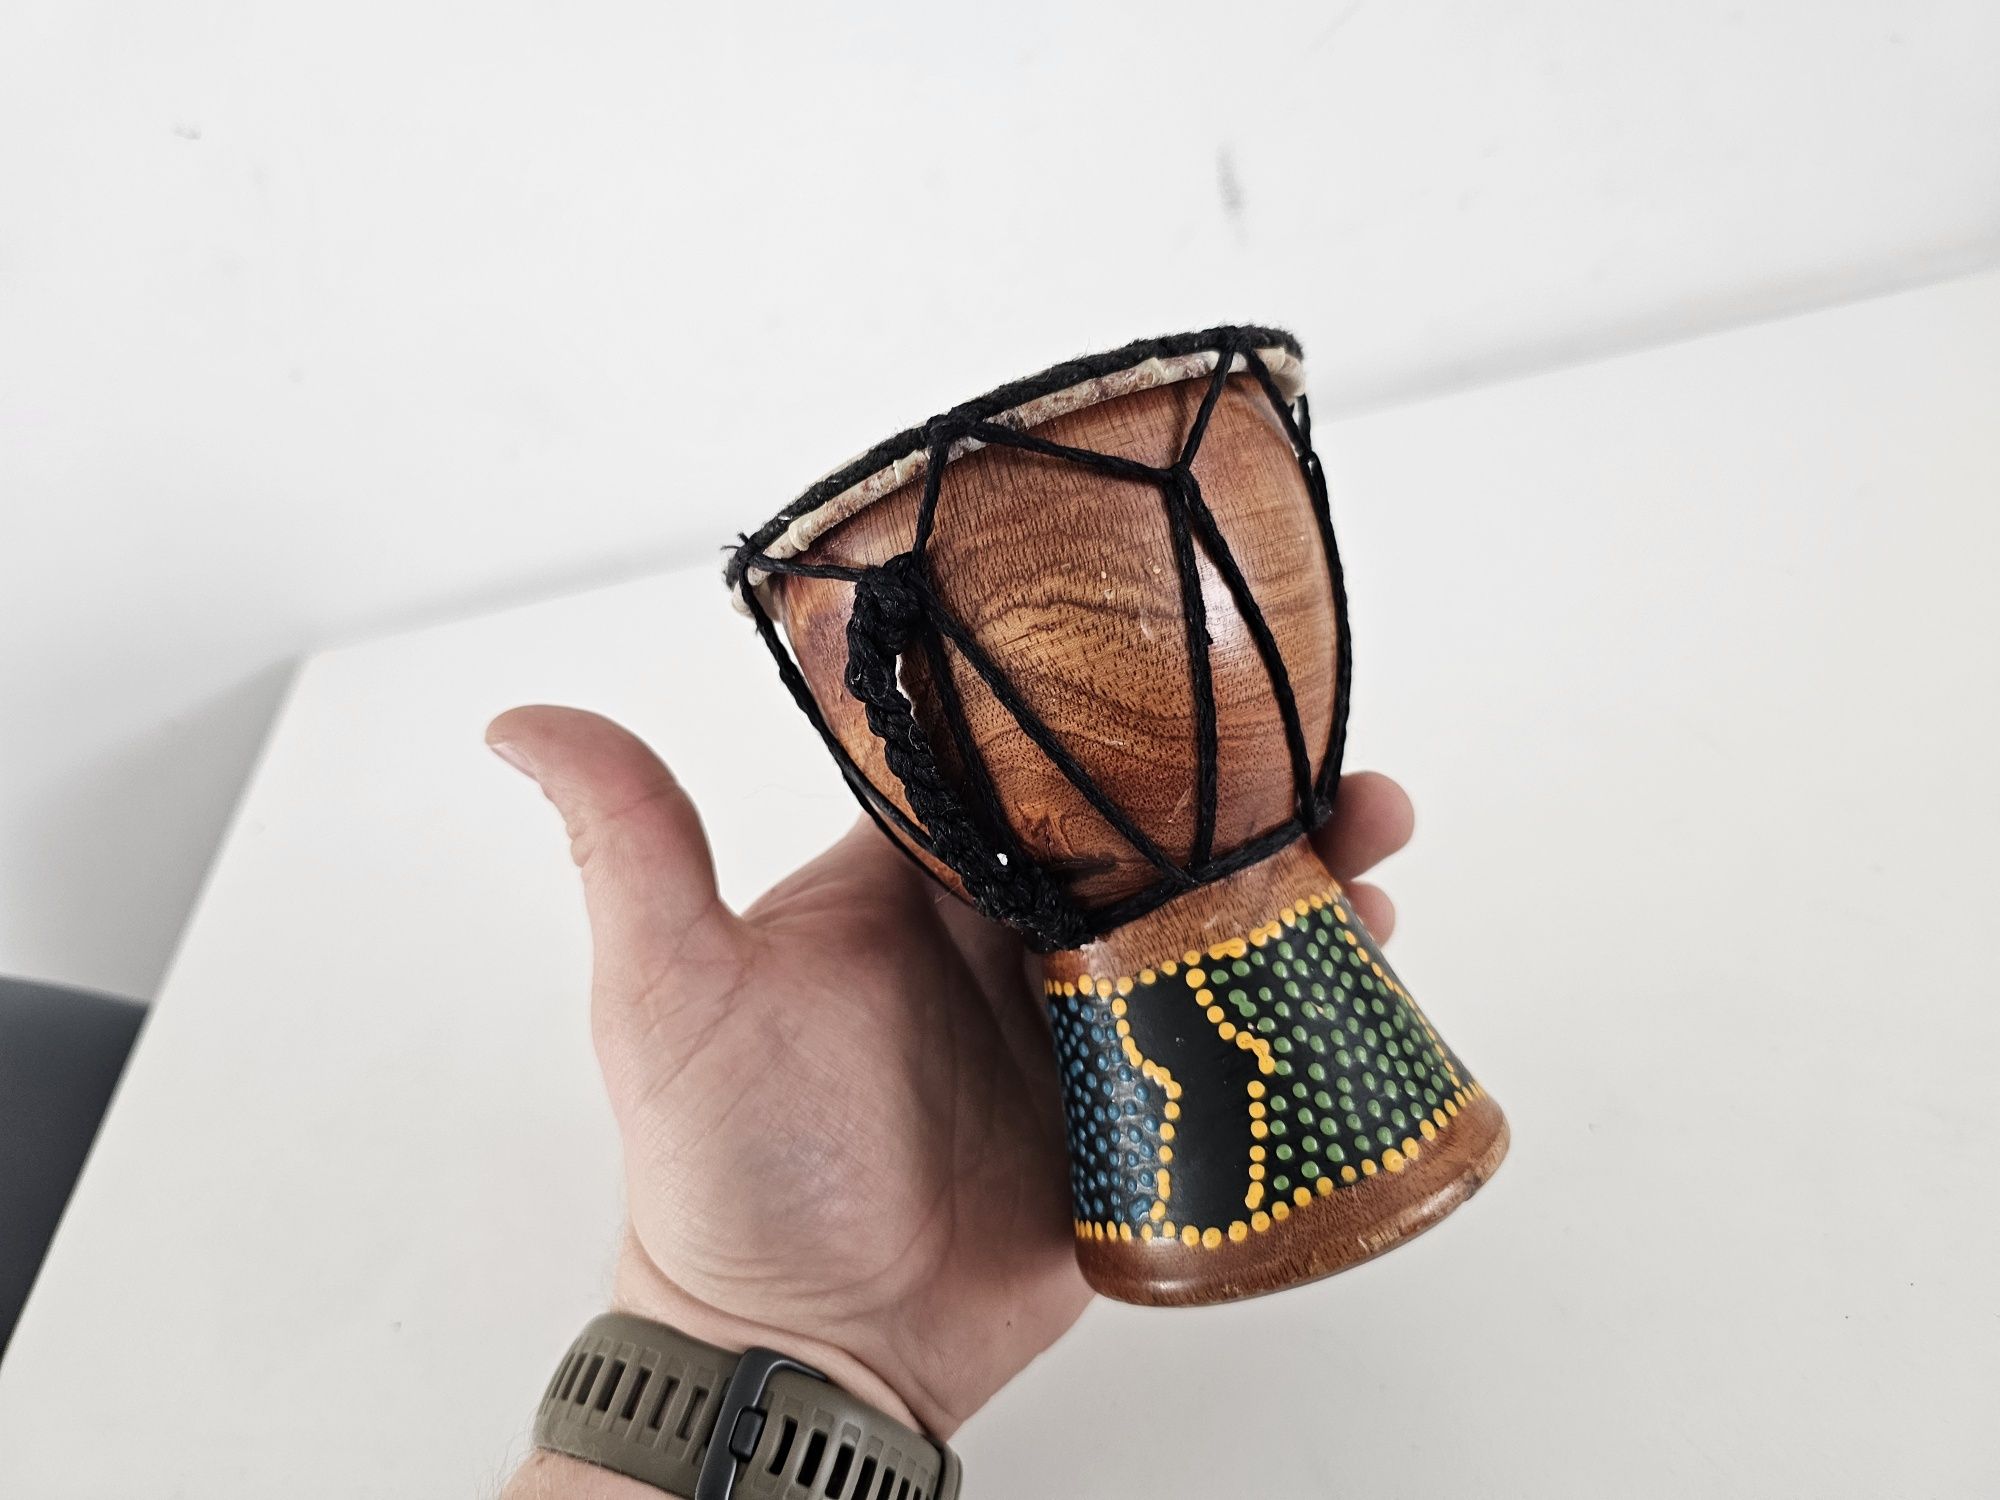 Przenośny bęben afrykański, klasyczny bębenk